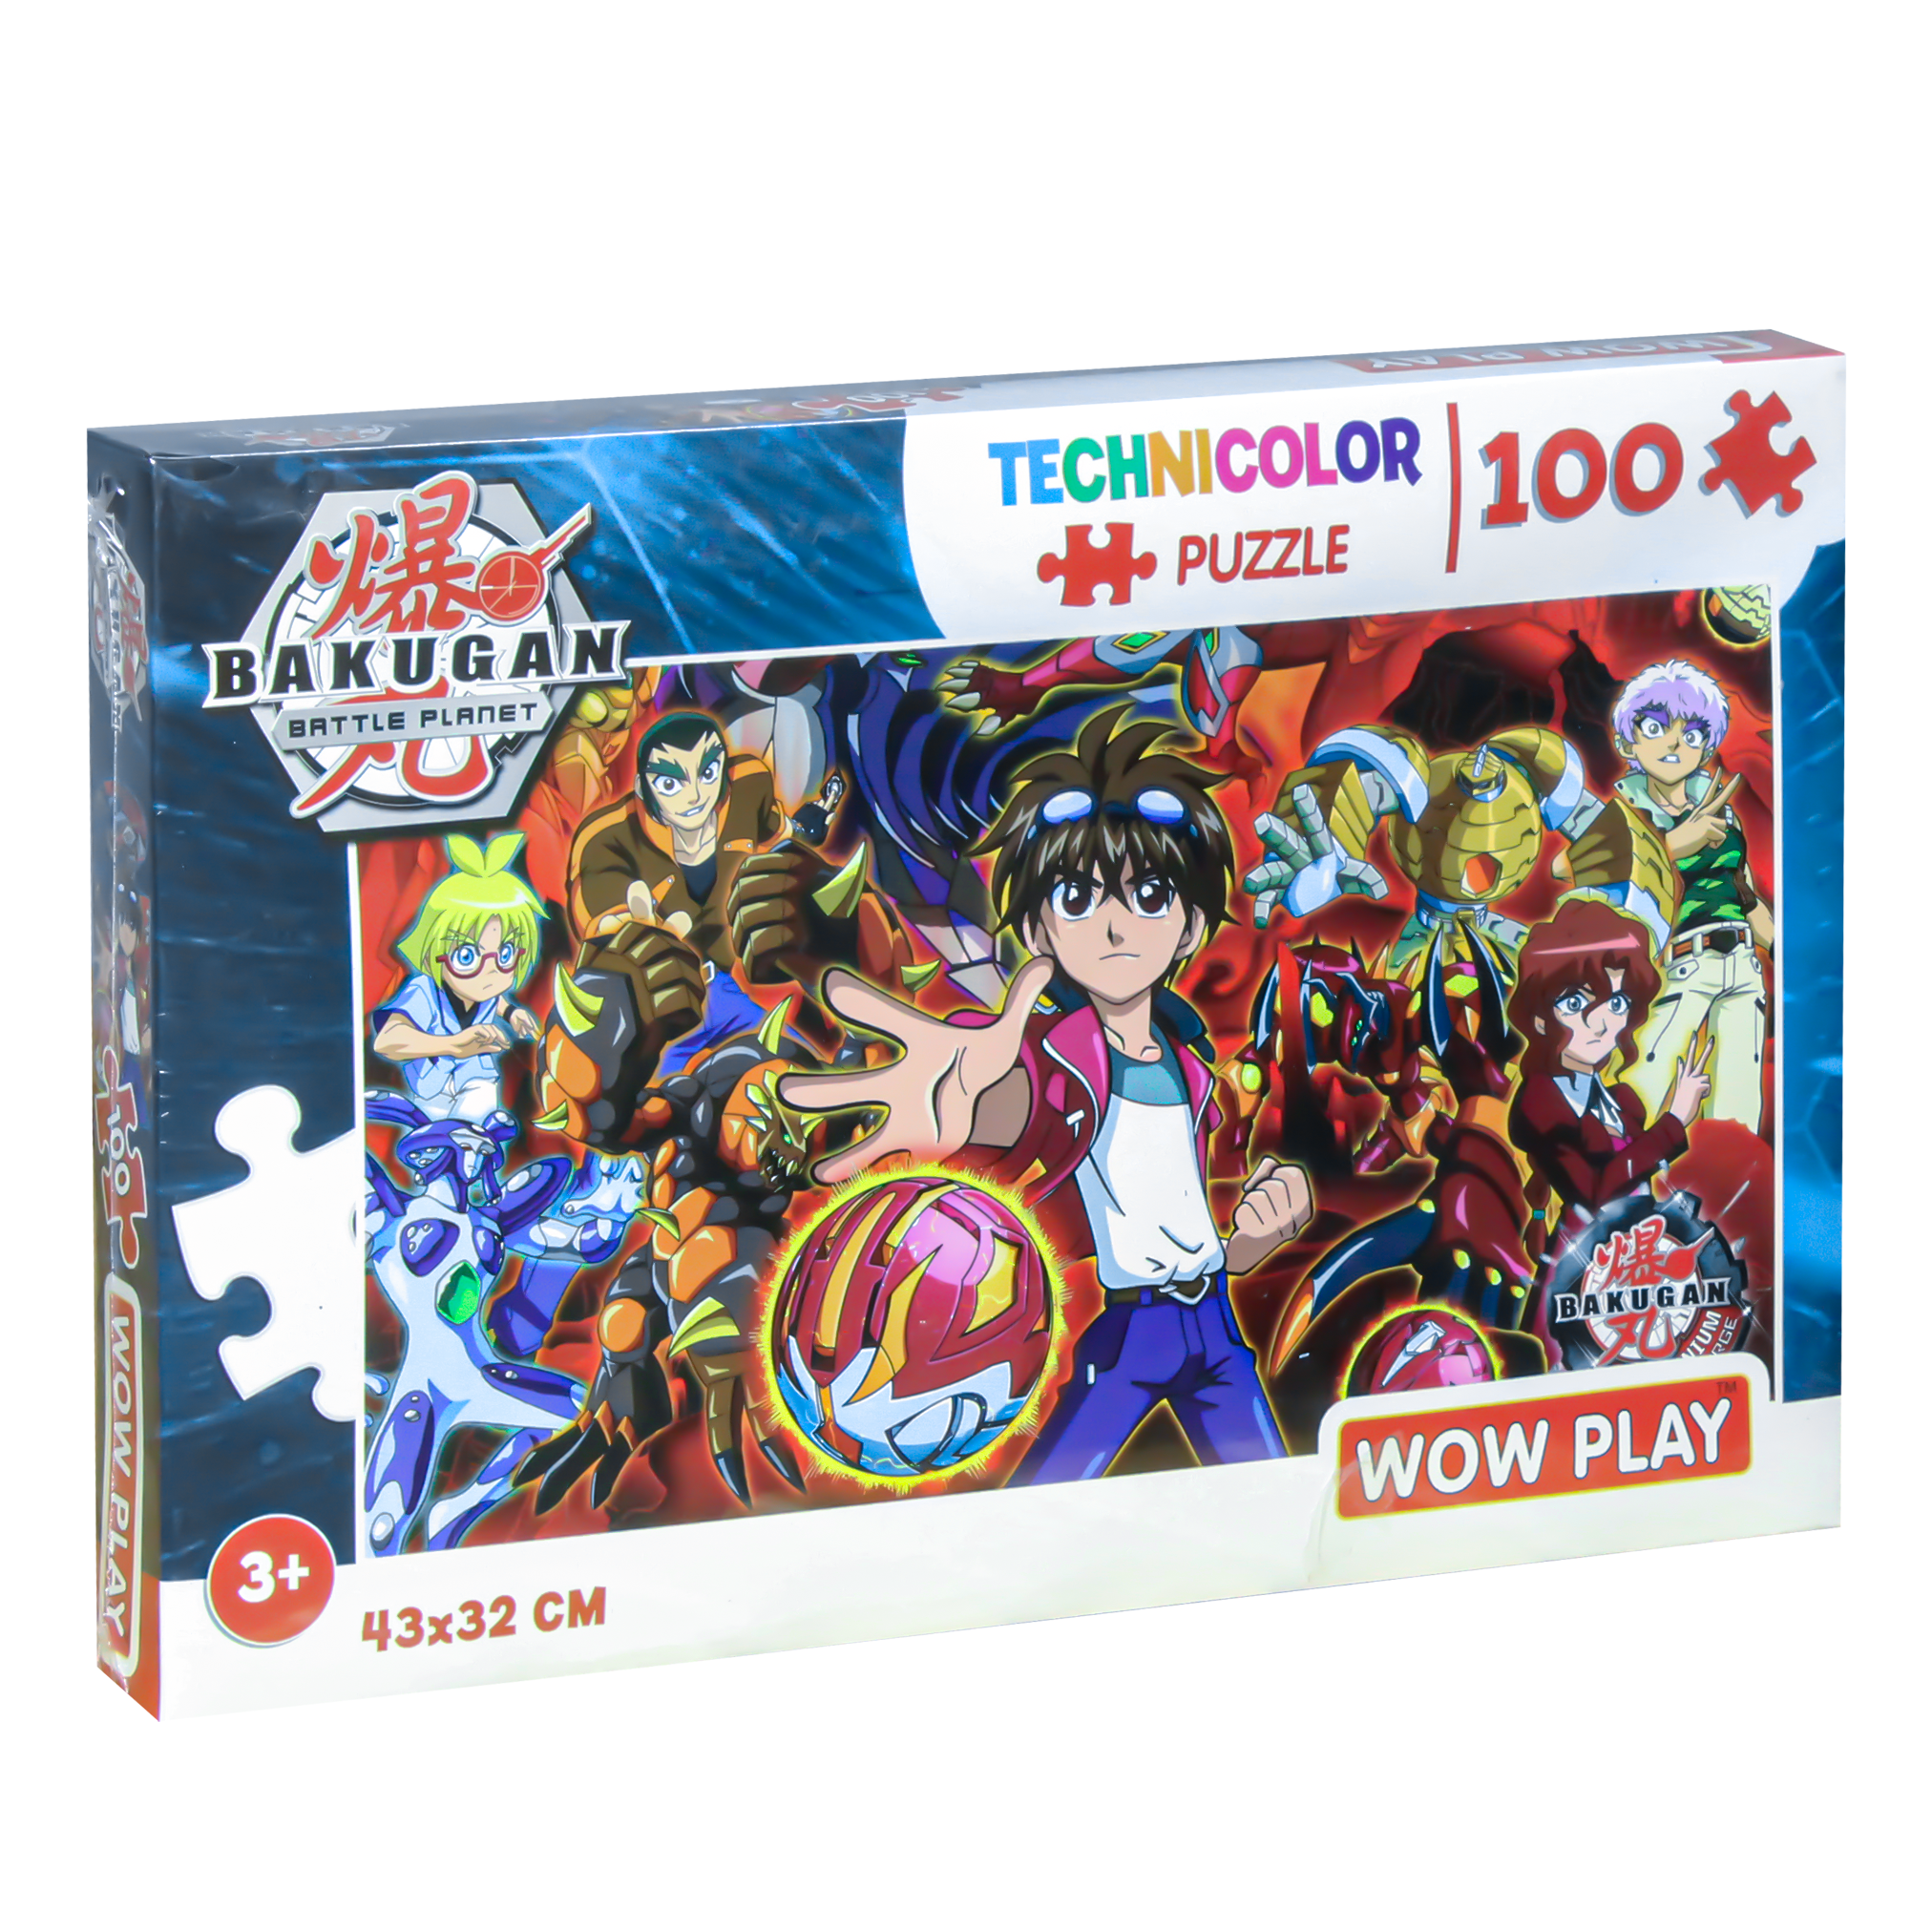 Wow Play Technicolour Puzzle 100 pieces 